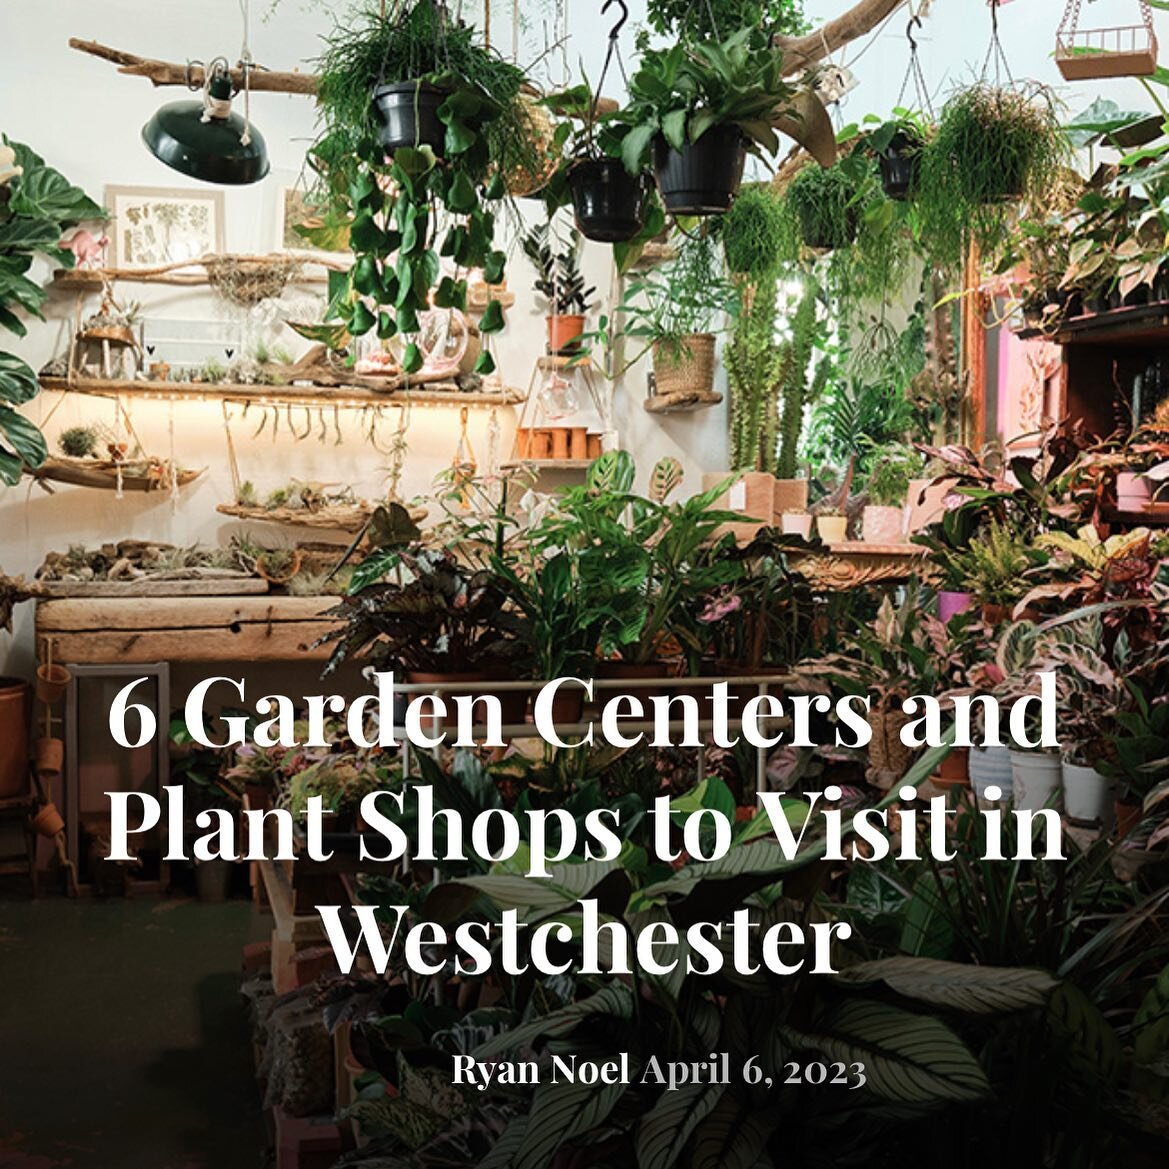 Thanks for the feature Westchester Magazine! 

https://westchestermagazine.com/home-real-estate/design-garden/garden-centers-plant-shops/

#mossyfern #allthingsplants @westchestermagazine